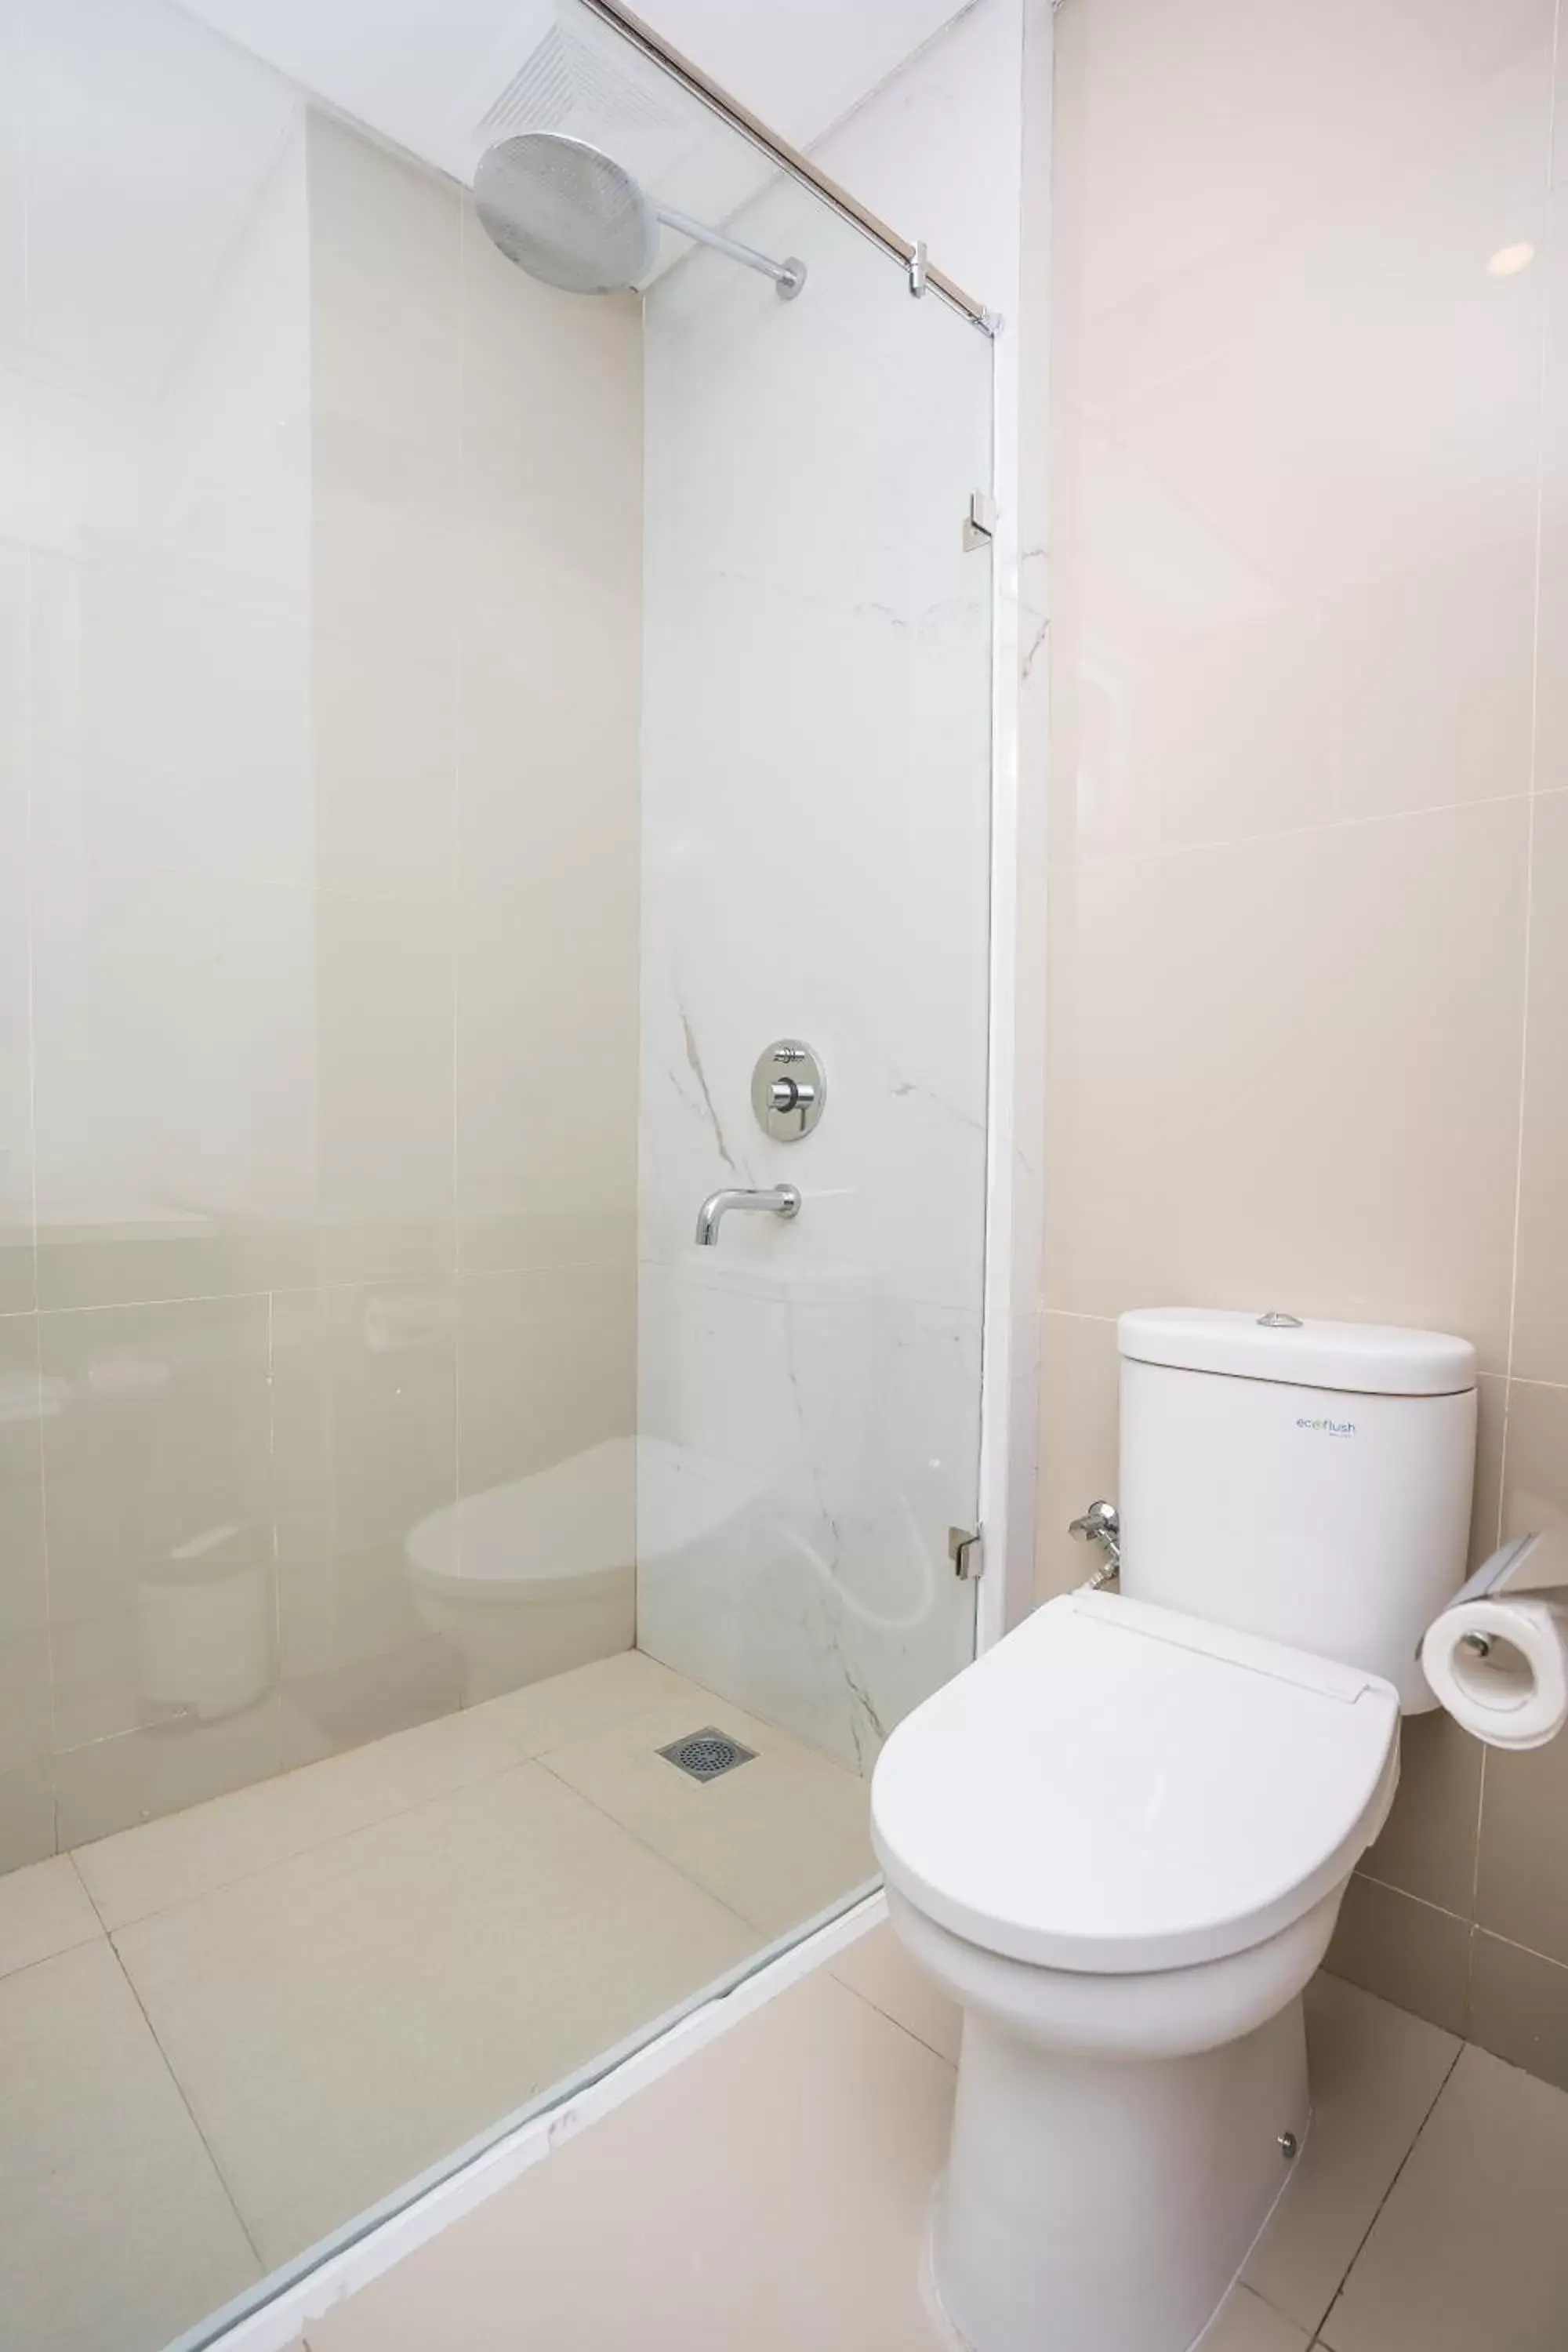 Toilet, Bathroom in Jambuluwuk Thamrin Hotel